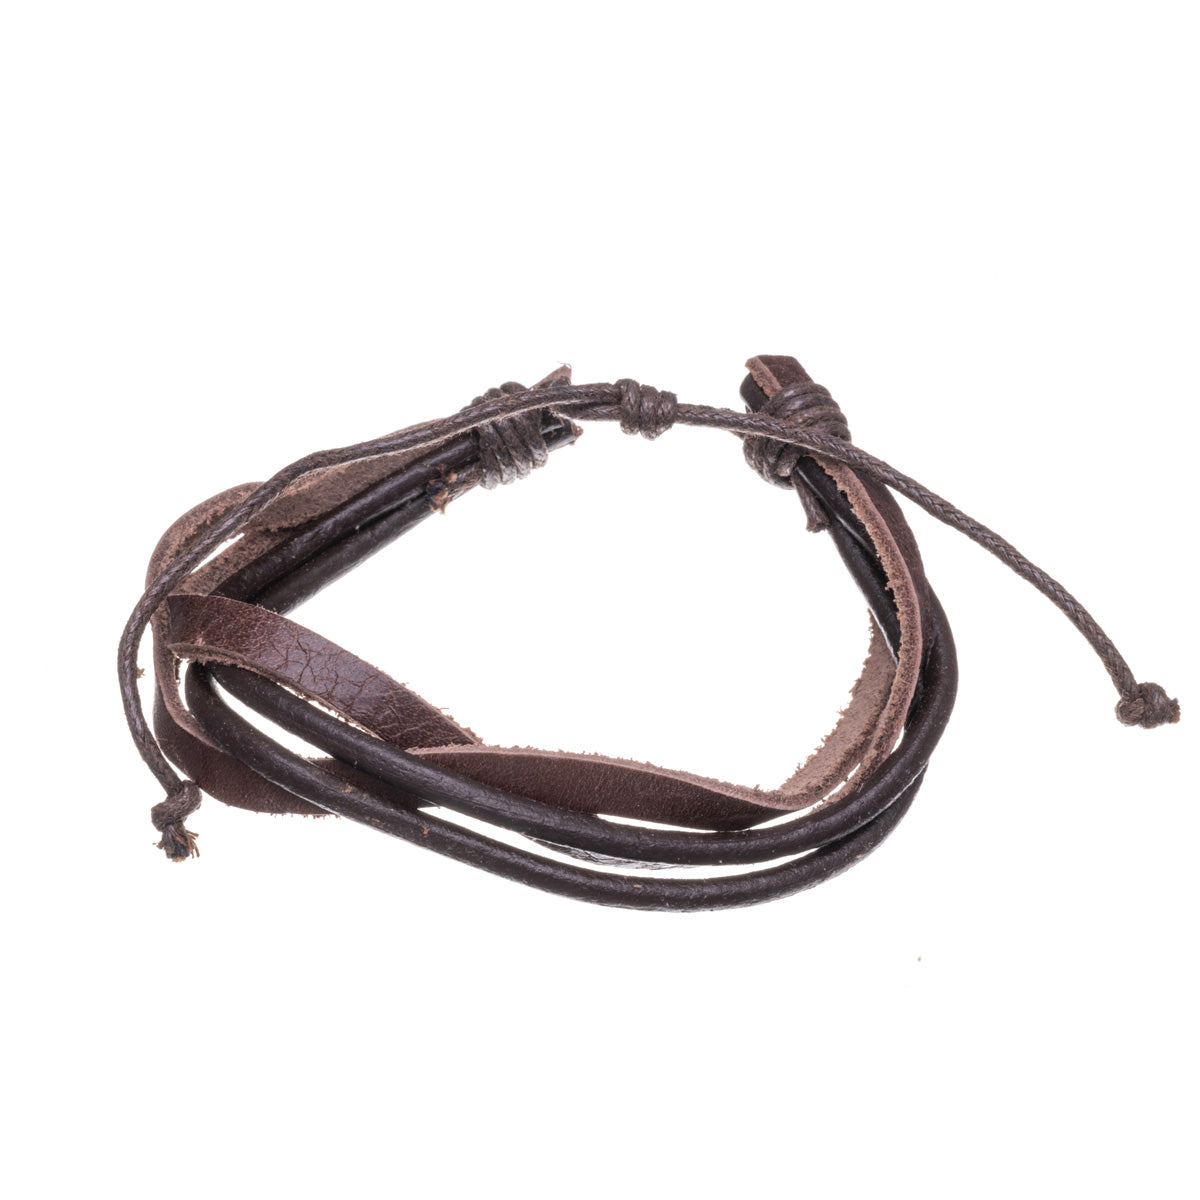 Adjustable four-row leather bracelet